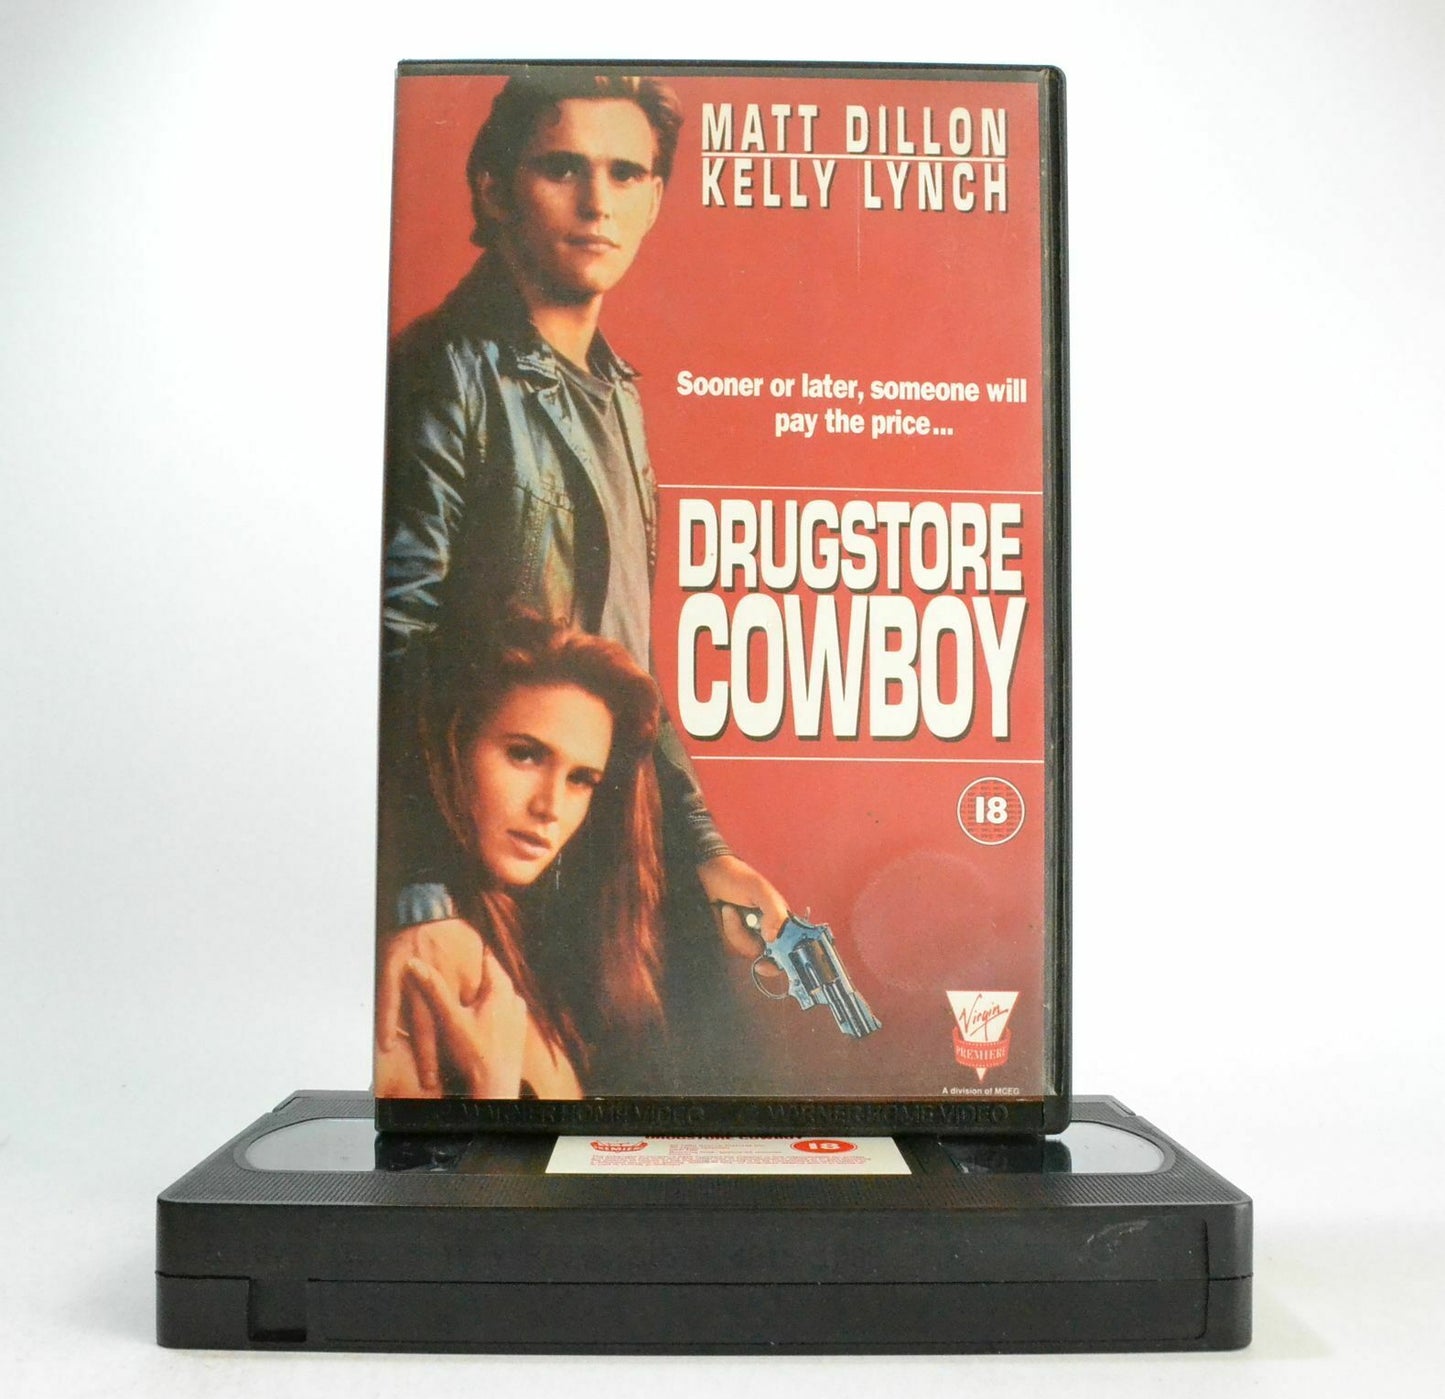 Drugstore Cowboy: Based On J.Fogle Novel - Drama - Large Box - Matt Dillon - VHS-